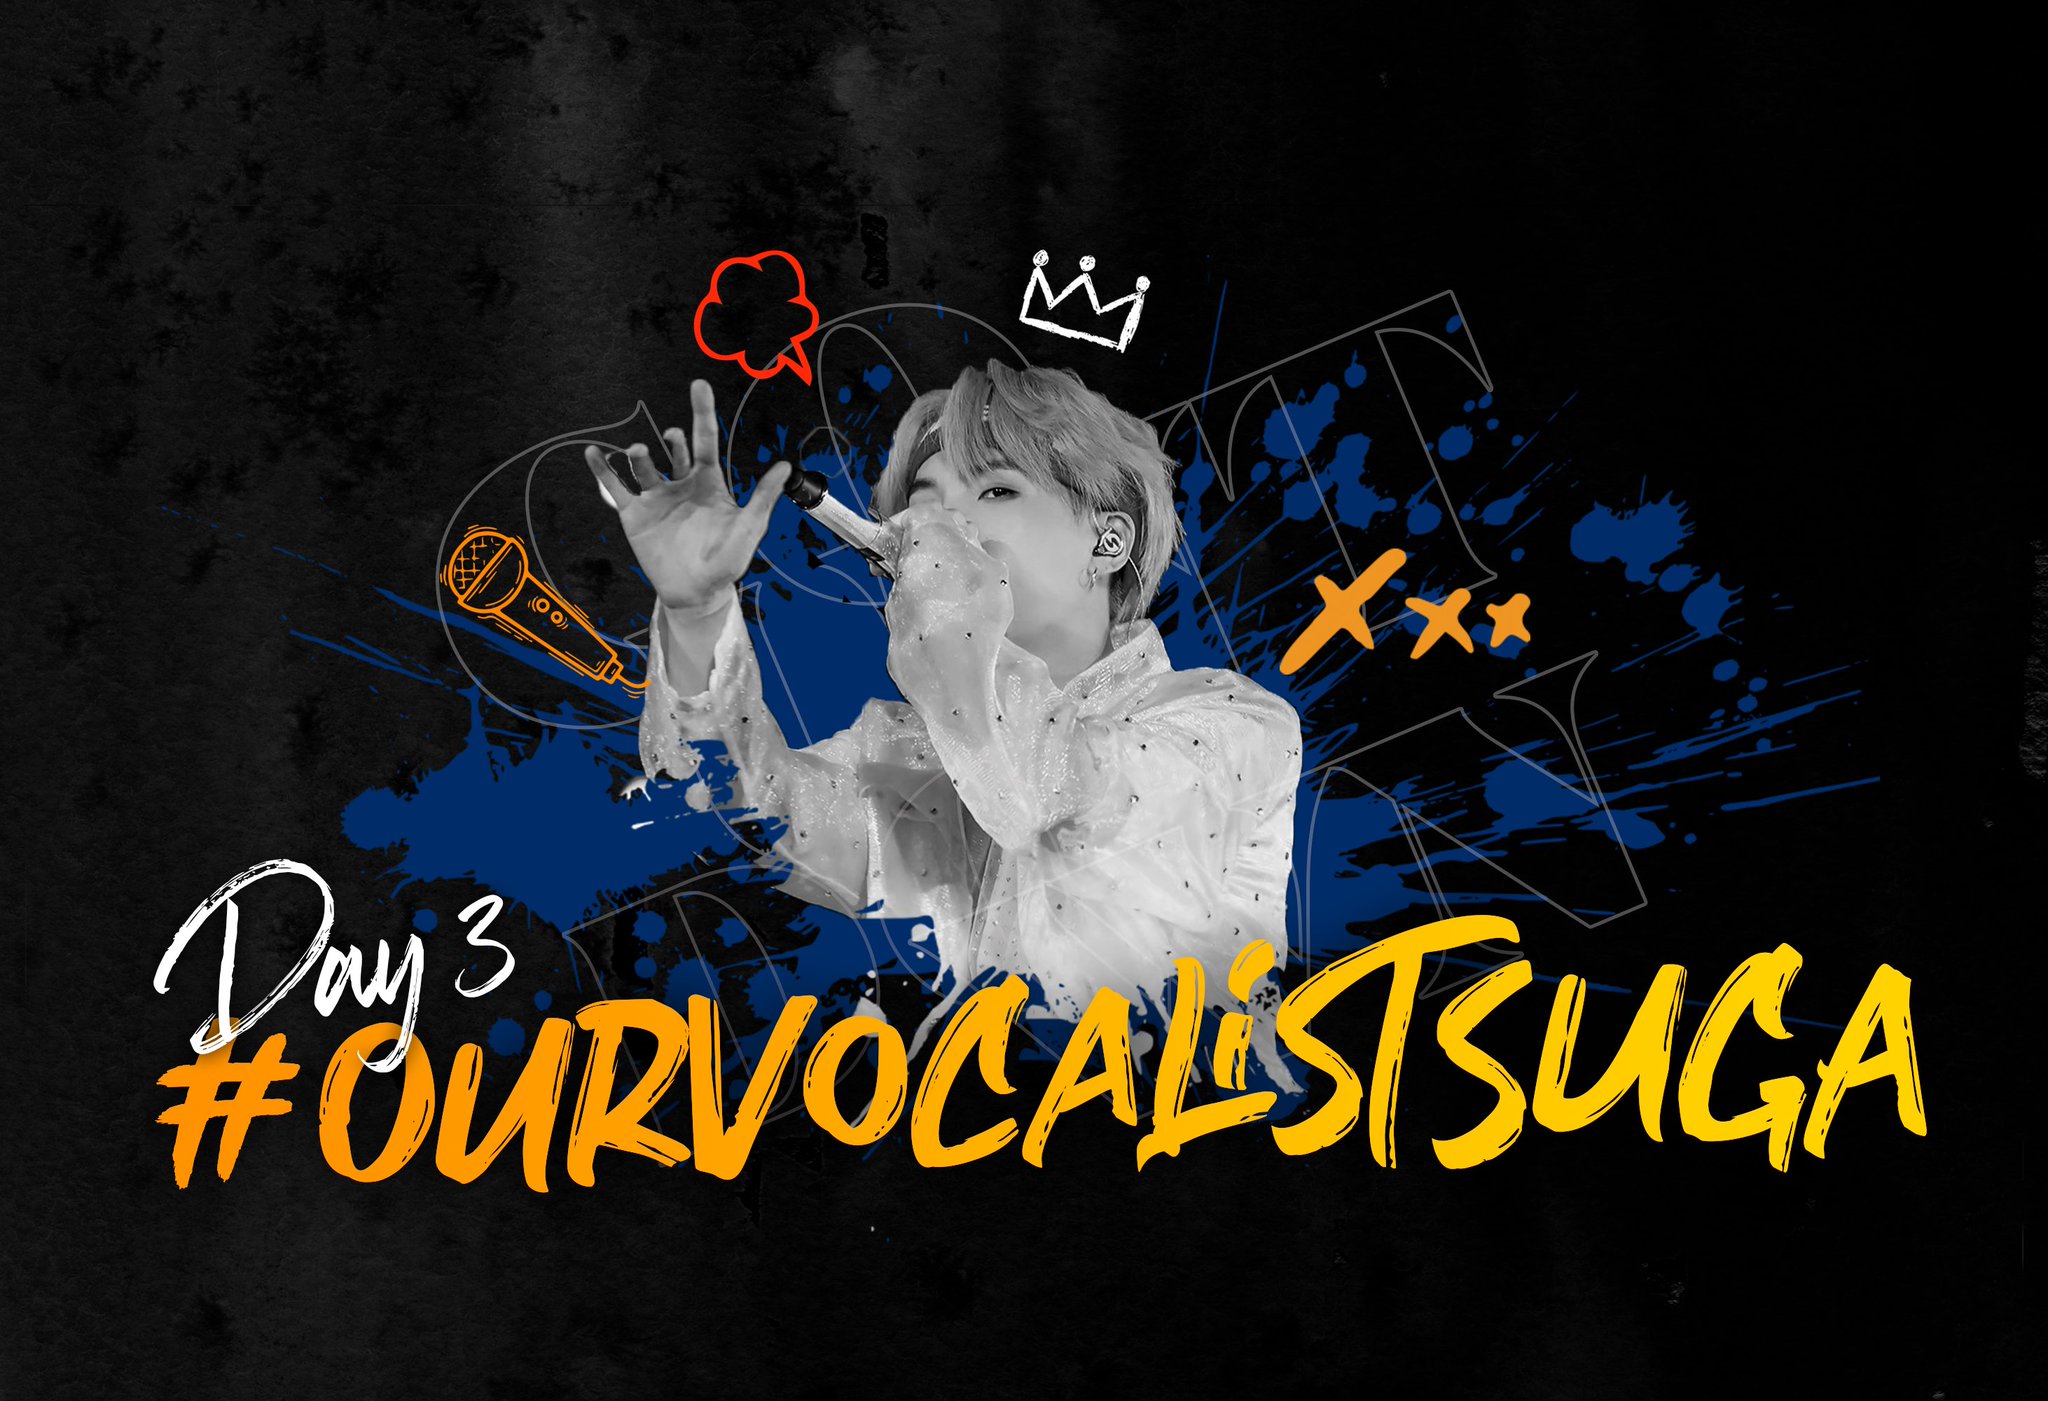 Vocalist SUGA (hashtag to celebrate SUGA's vocals)